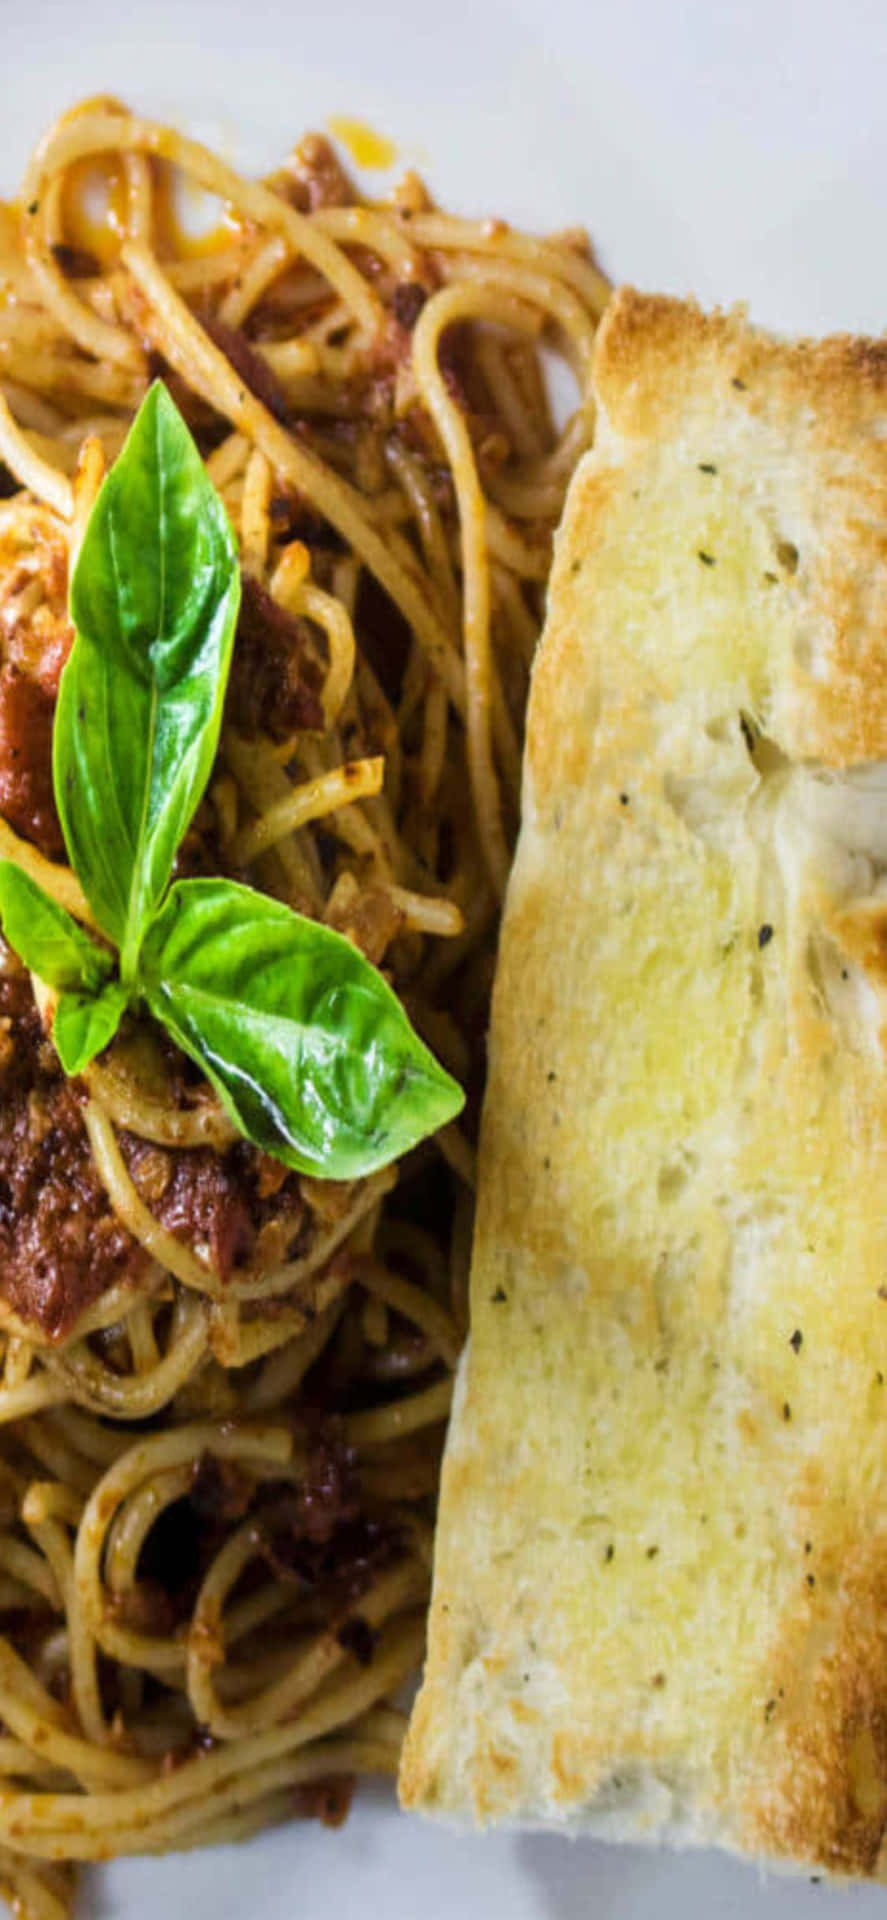 Classic Spaghetti With Bread iPhone X Pasta Background